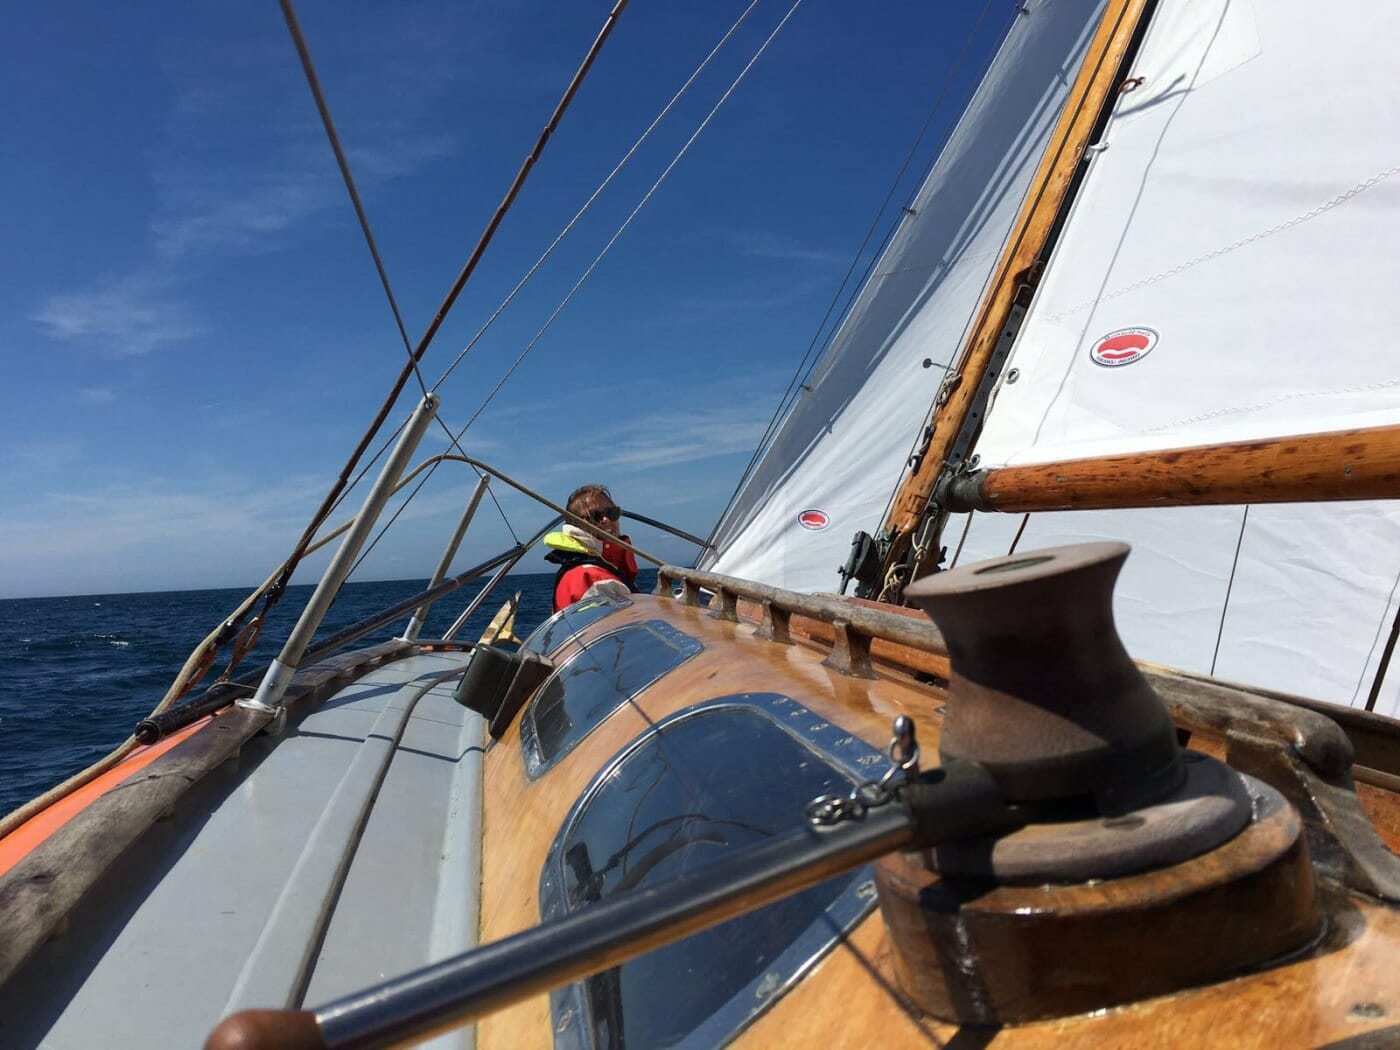 New sails